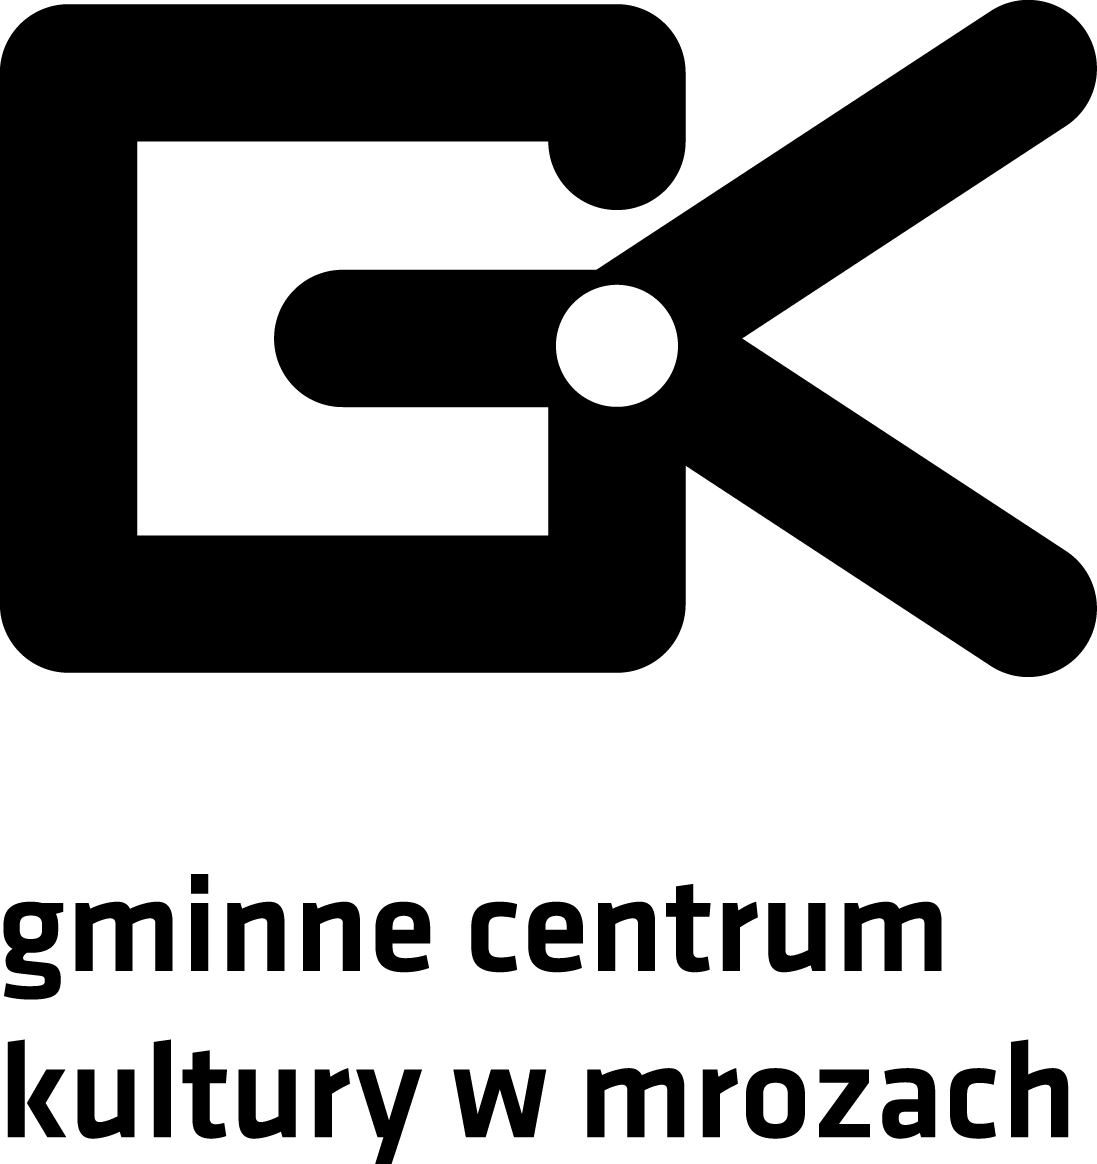 GCK Mrozy logo z opisem mono